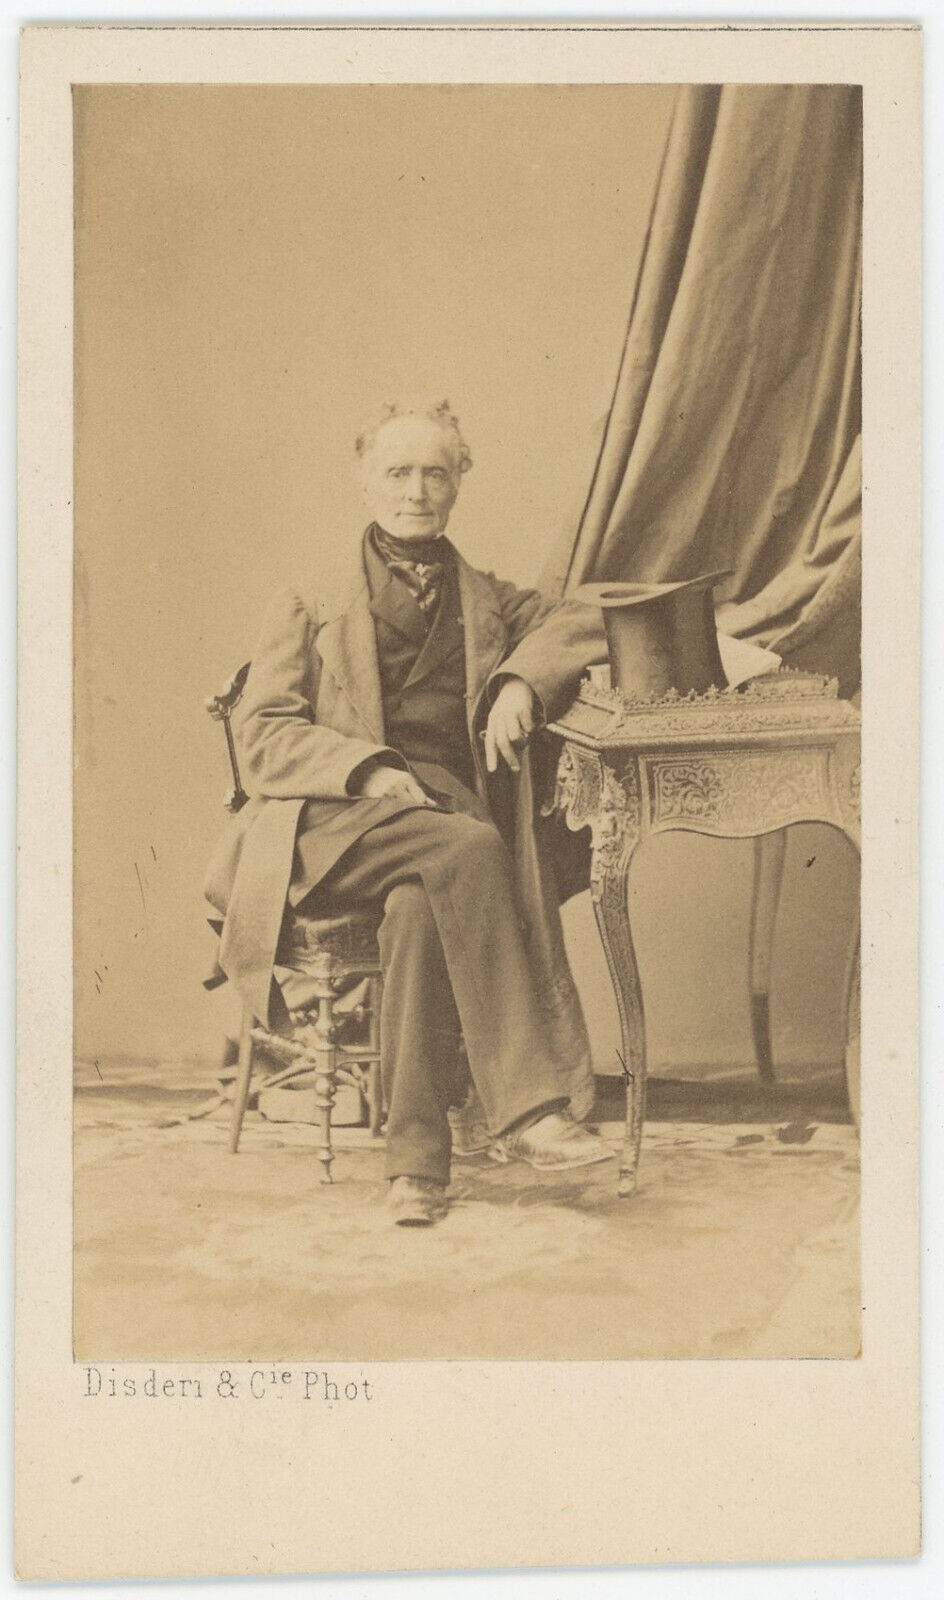 CDV circa 1865. Jean-François Mocquard, Chief of Staff to Napoleon III. Disderi